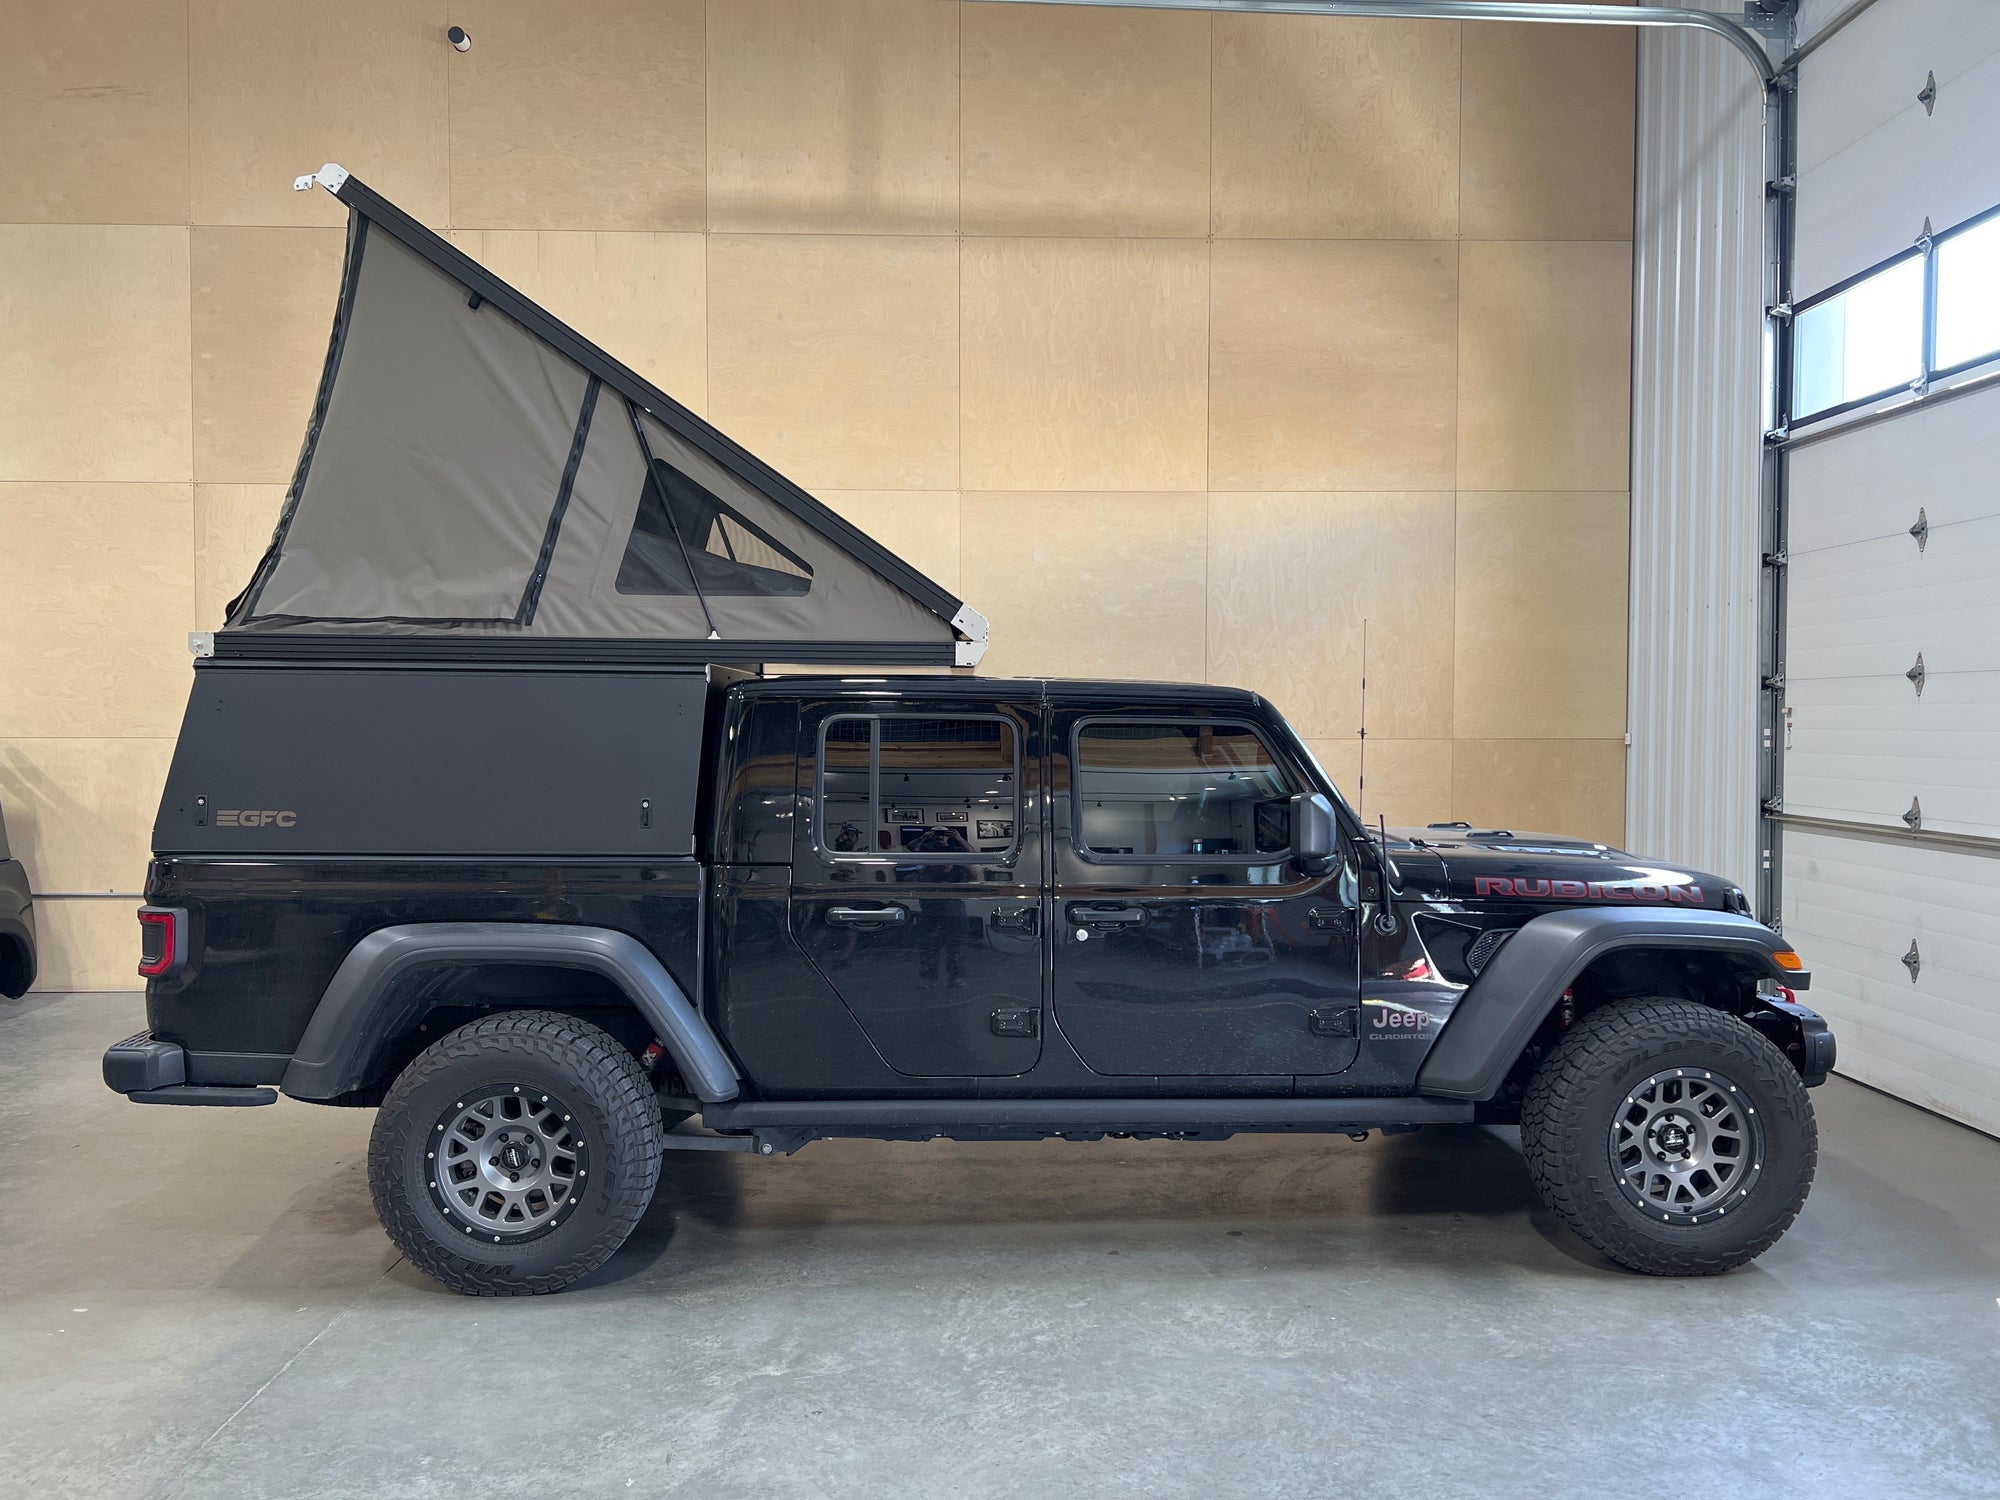 2021 Jeep Gladiator Camper - Build #5336